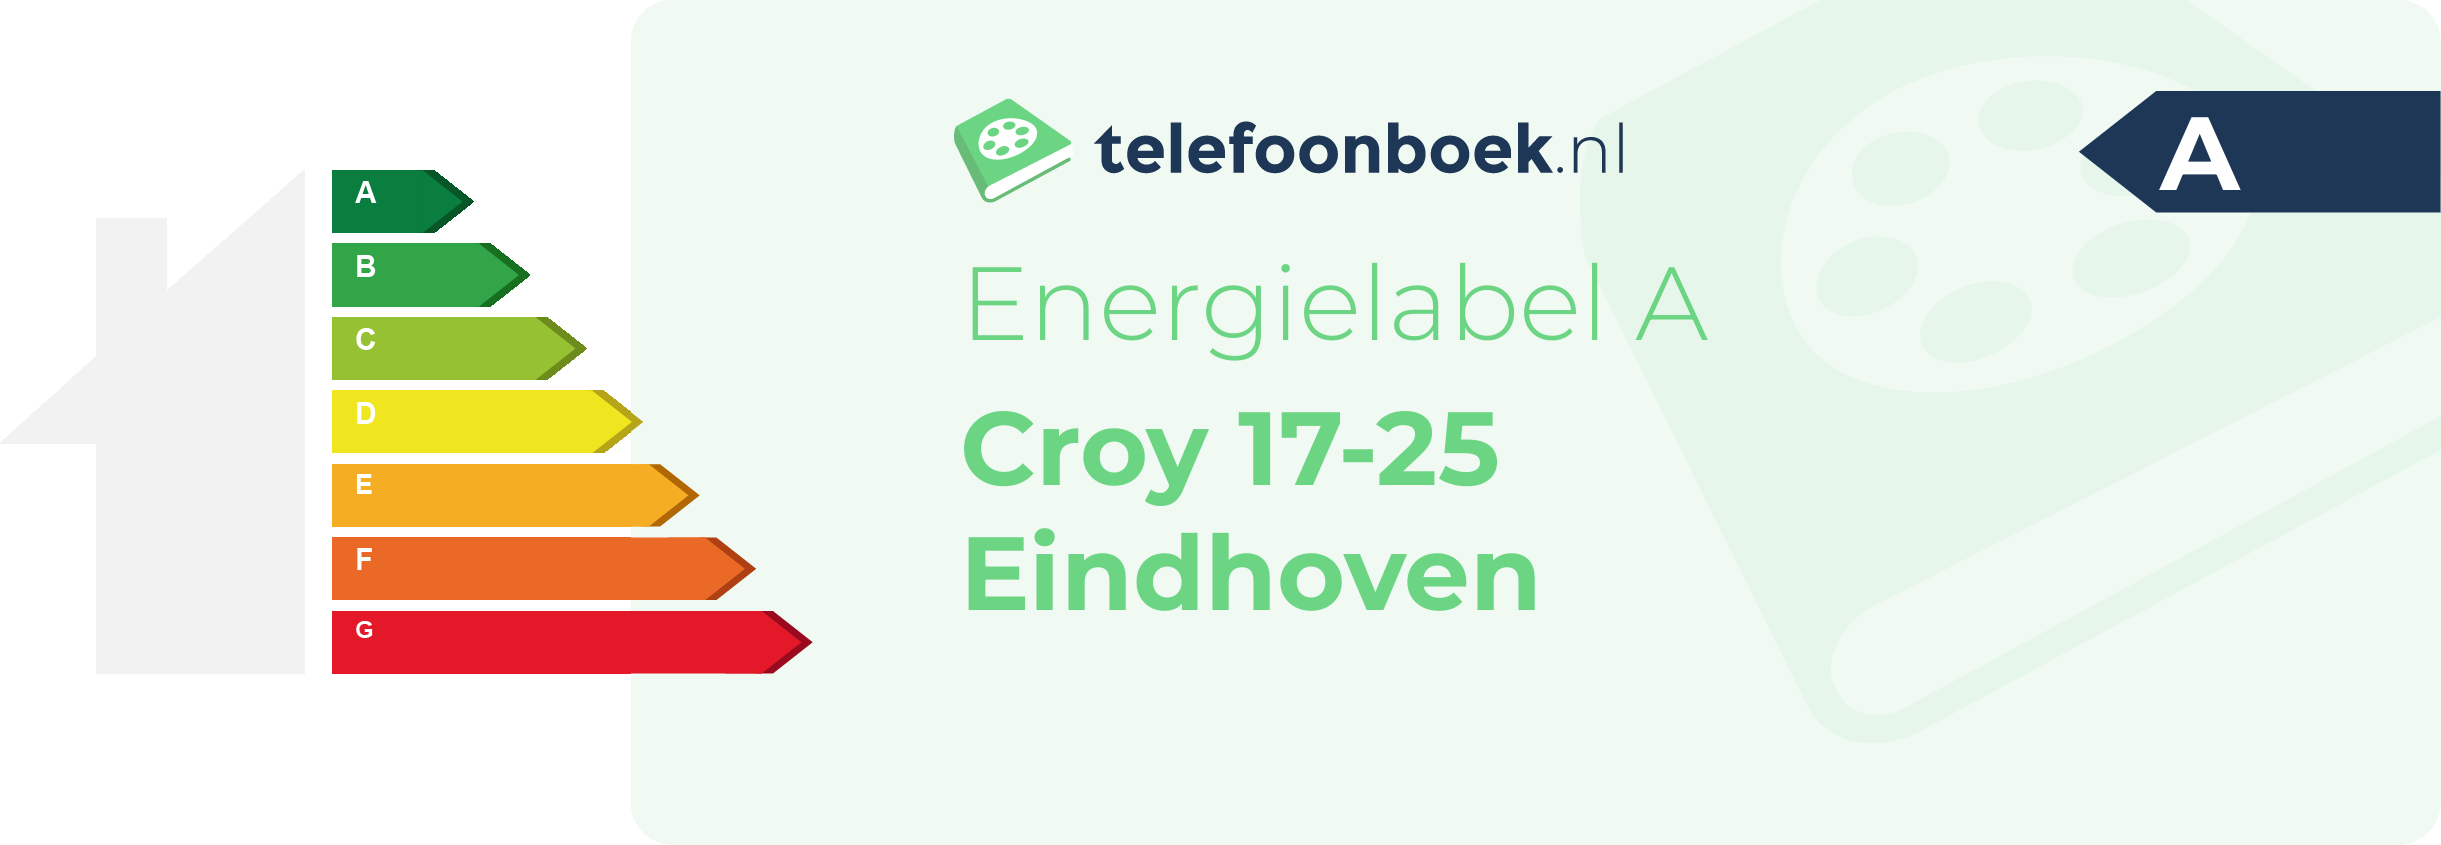 Energielabel Croy 17-25 Eindhoven